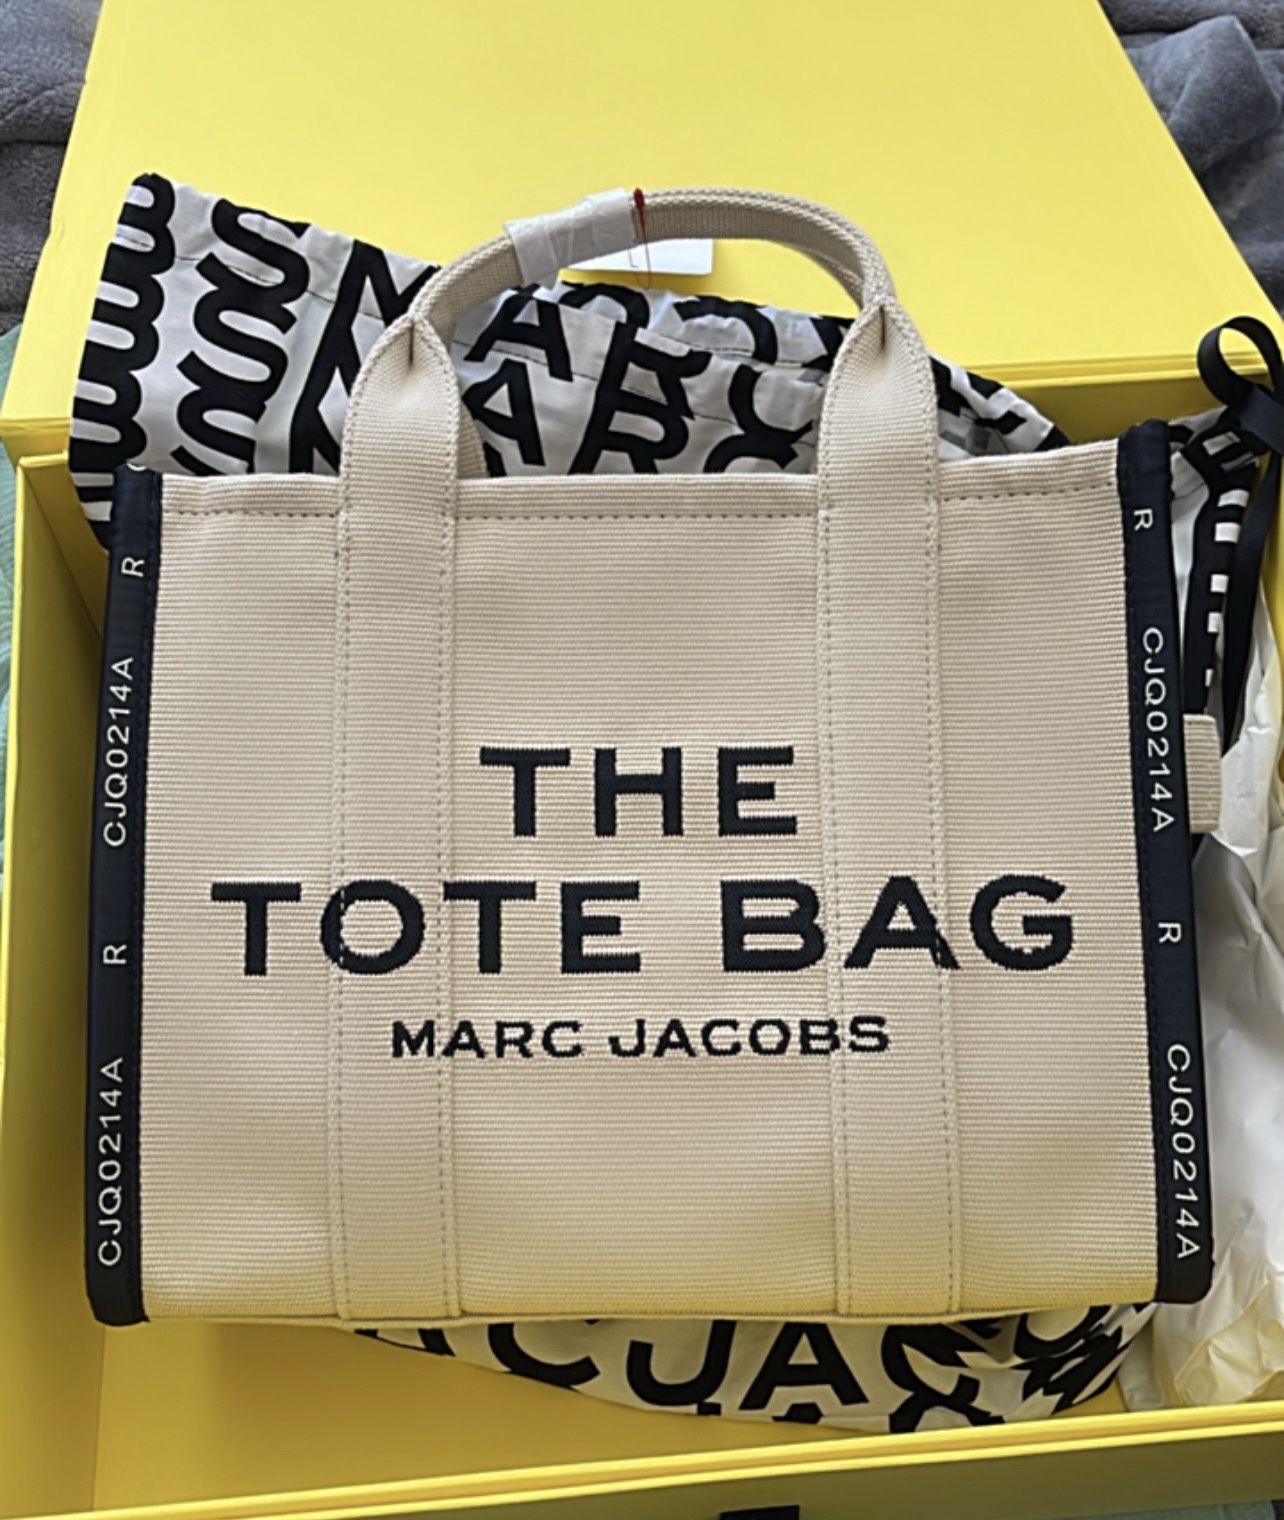 Marc Jacobs Medium The Jacquard Tote Bag